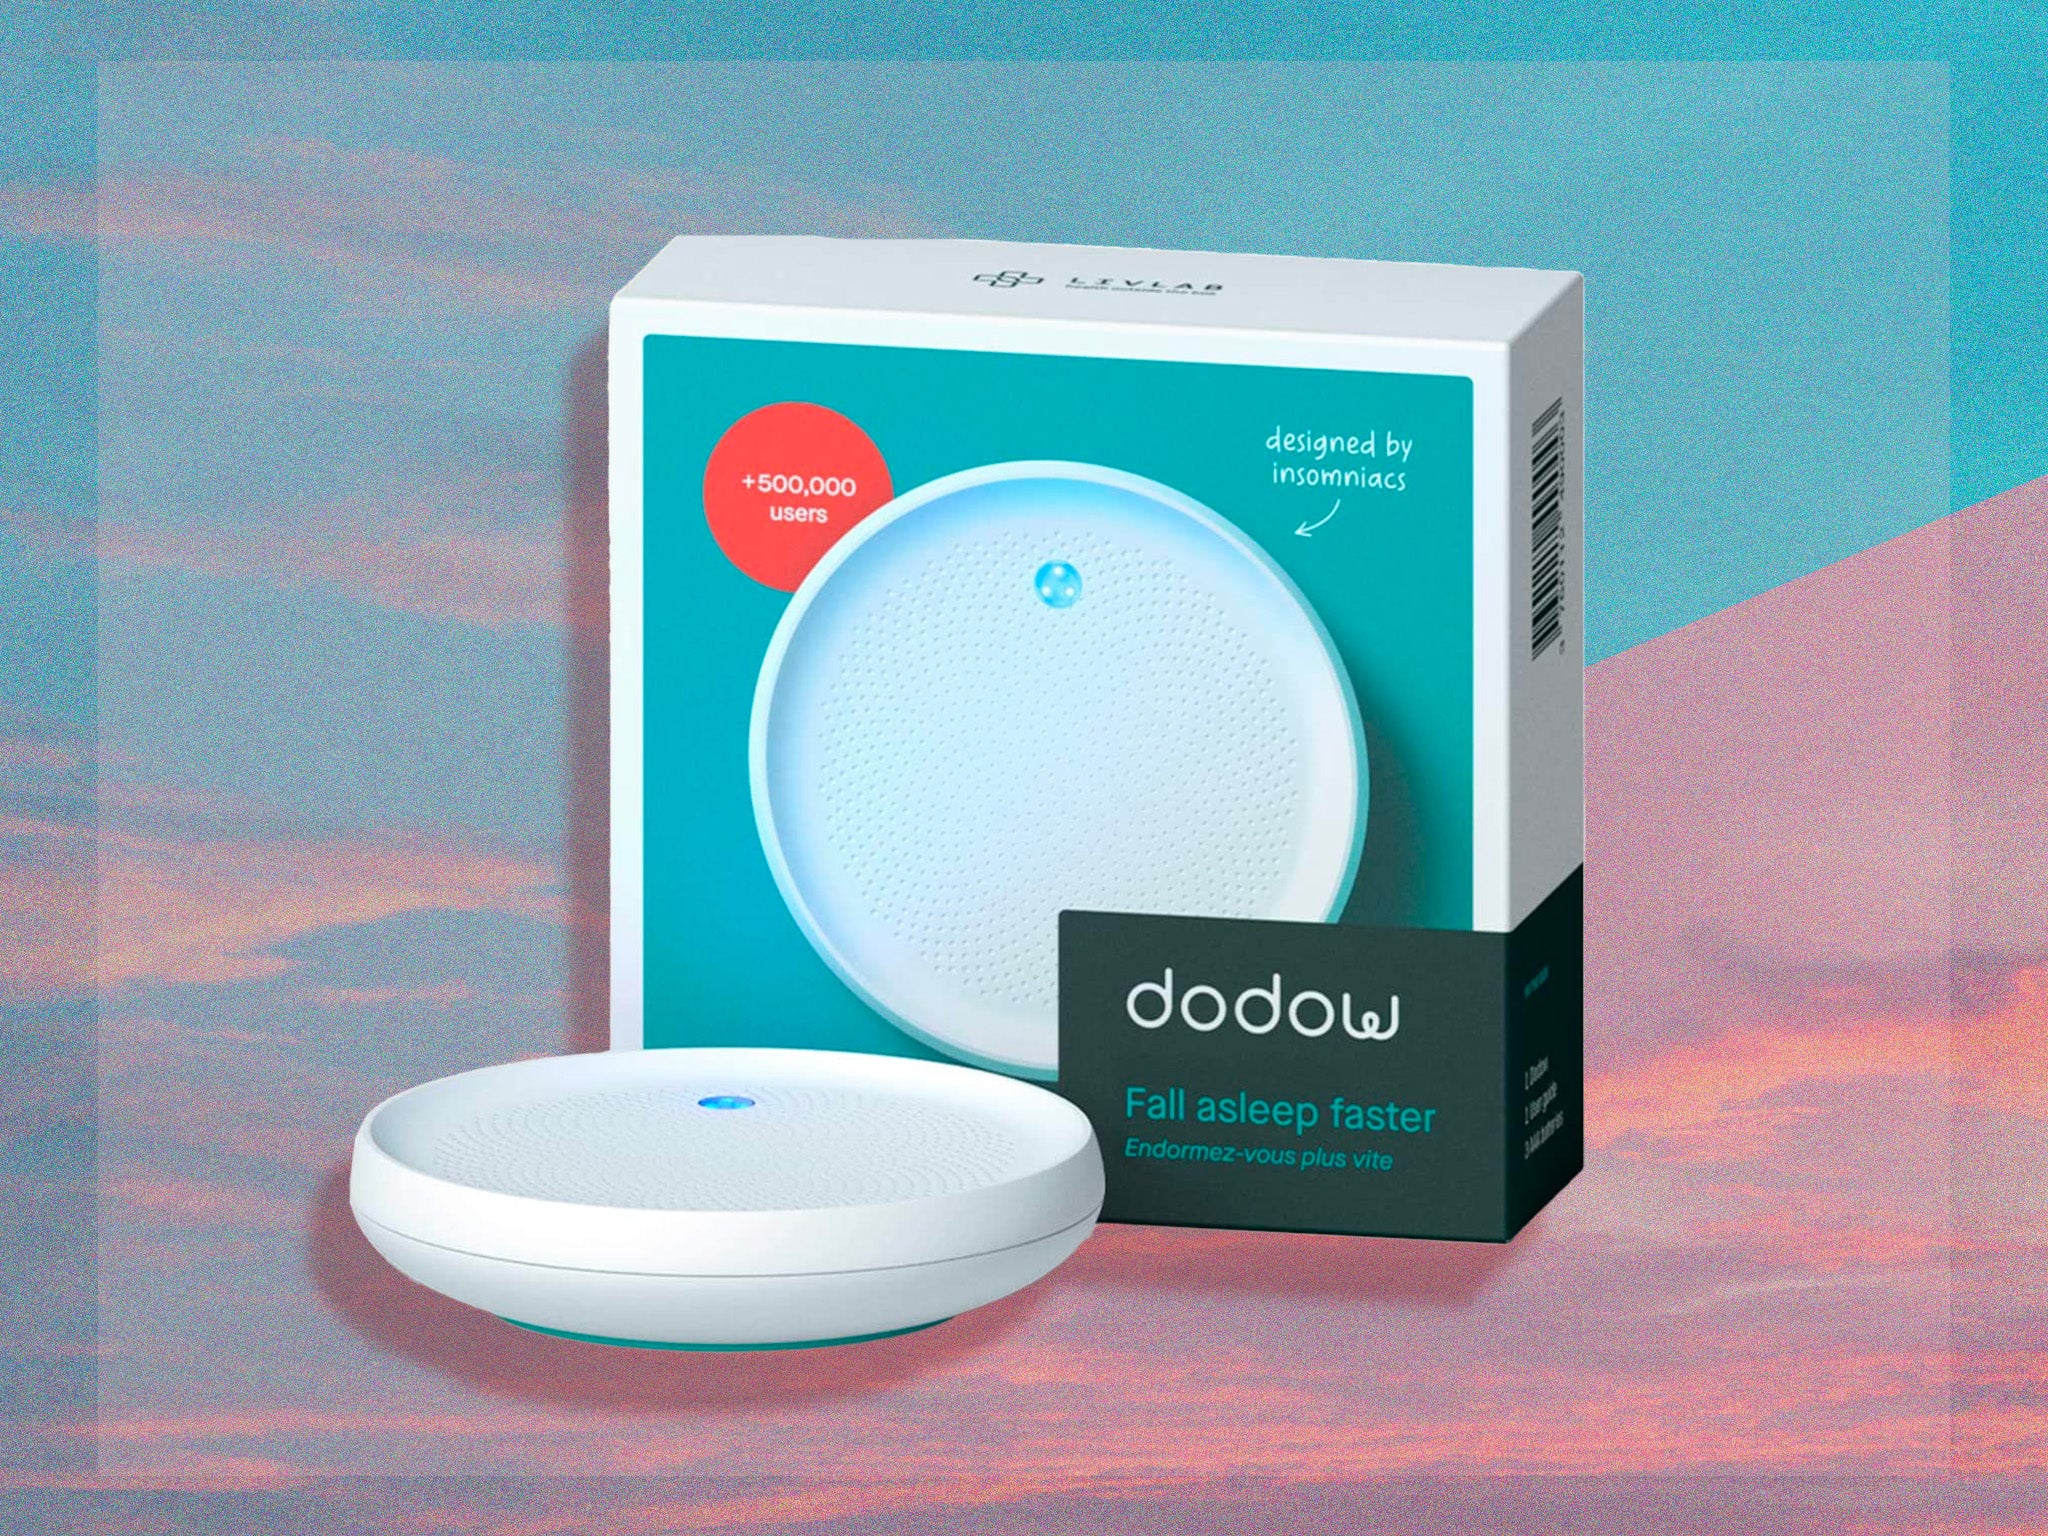 Dodow sleep aid device review